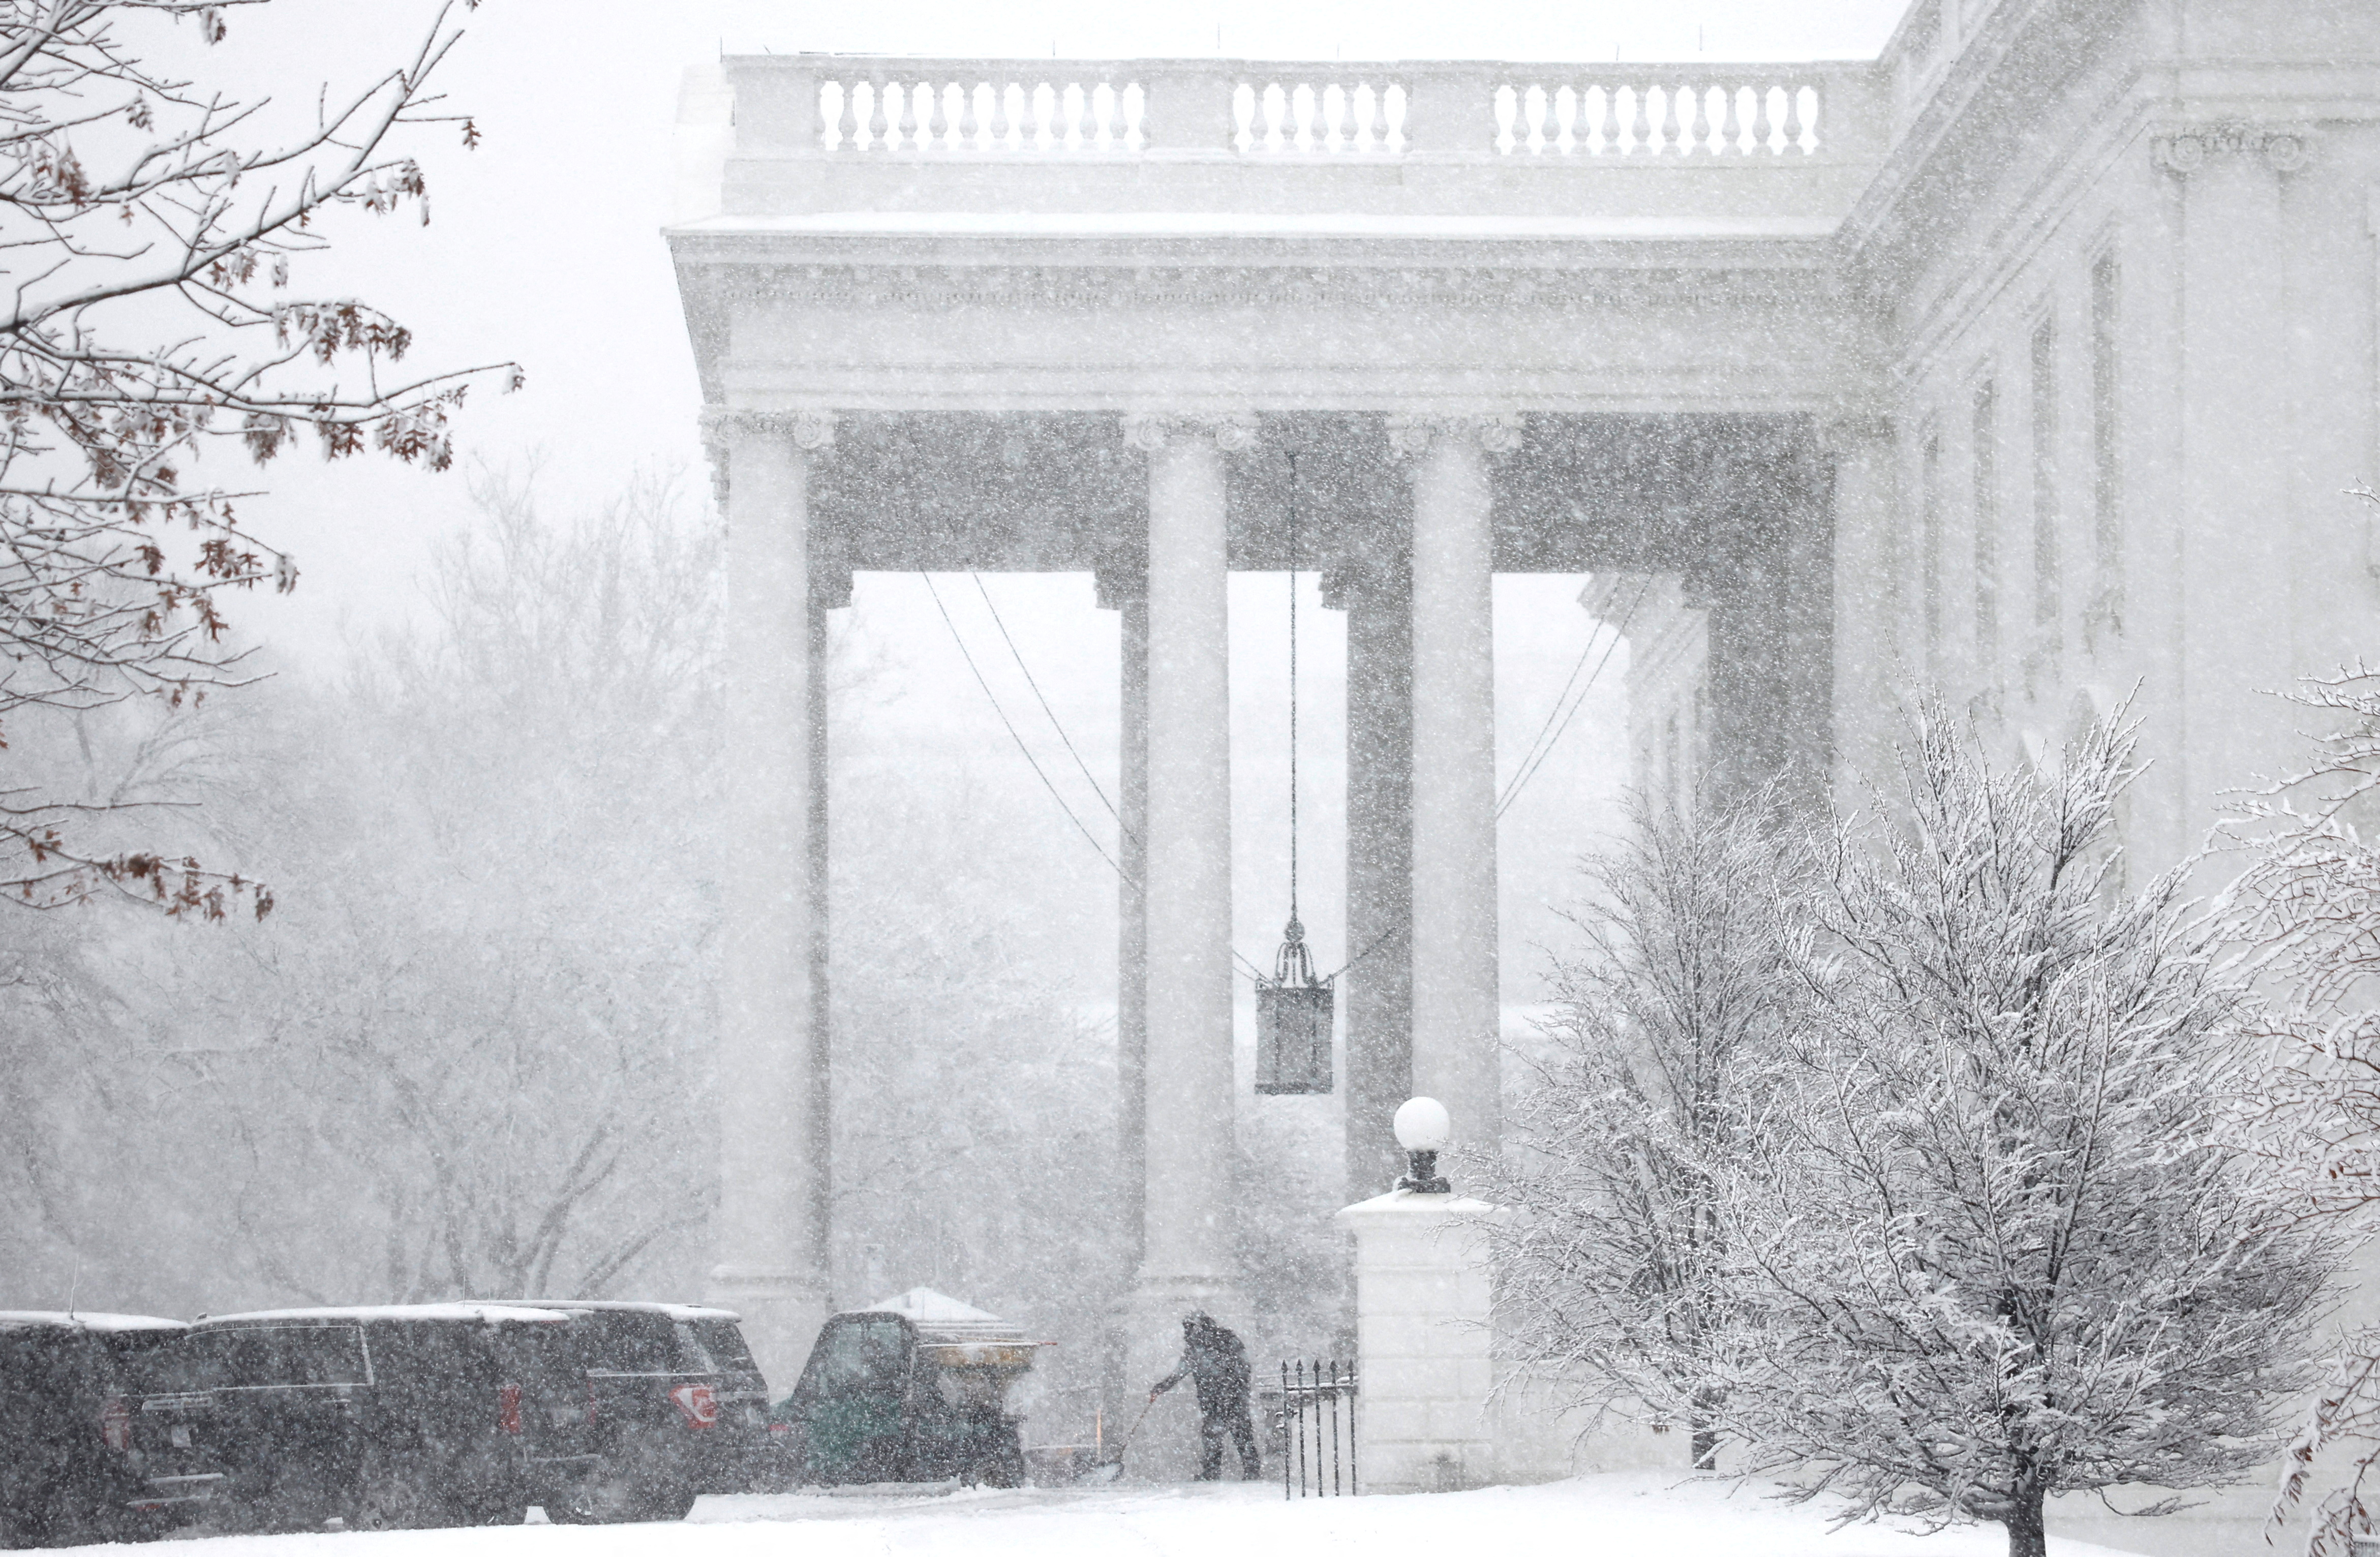 The White House during snowfall in Washington